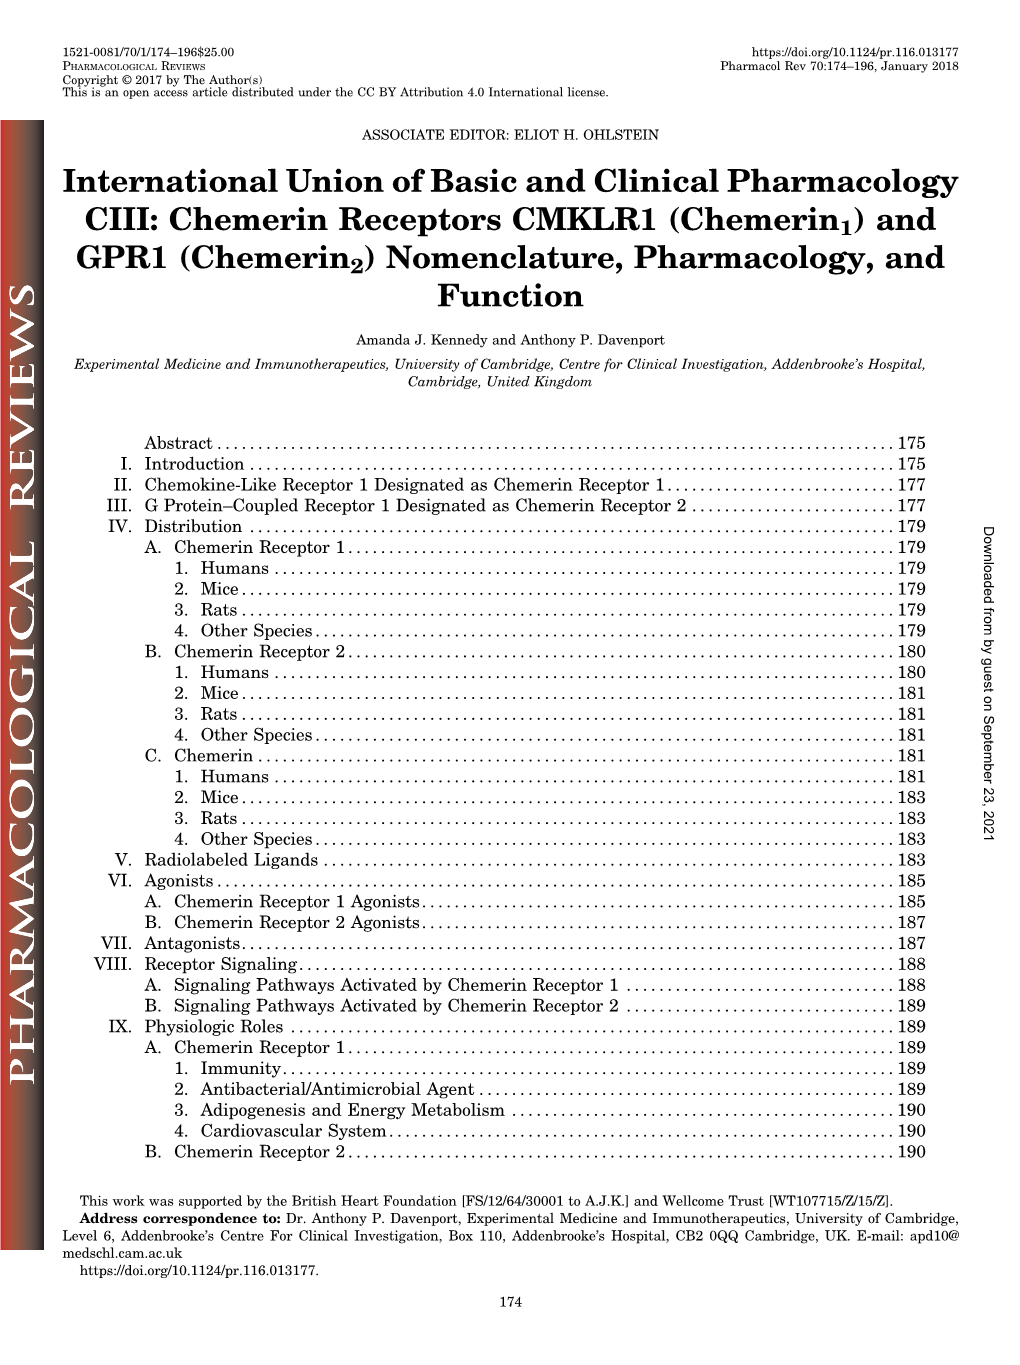 Chemerin Receptors CMKLR1 (Chemerin1) and GPR1 (Chemerin2) Nomenclature, Pharmacology, and Function